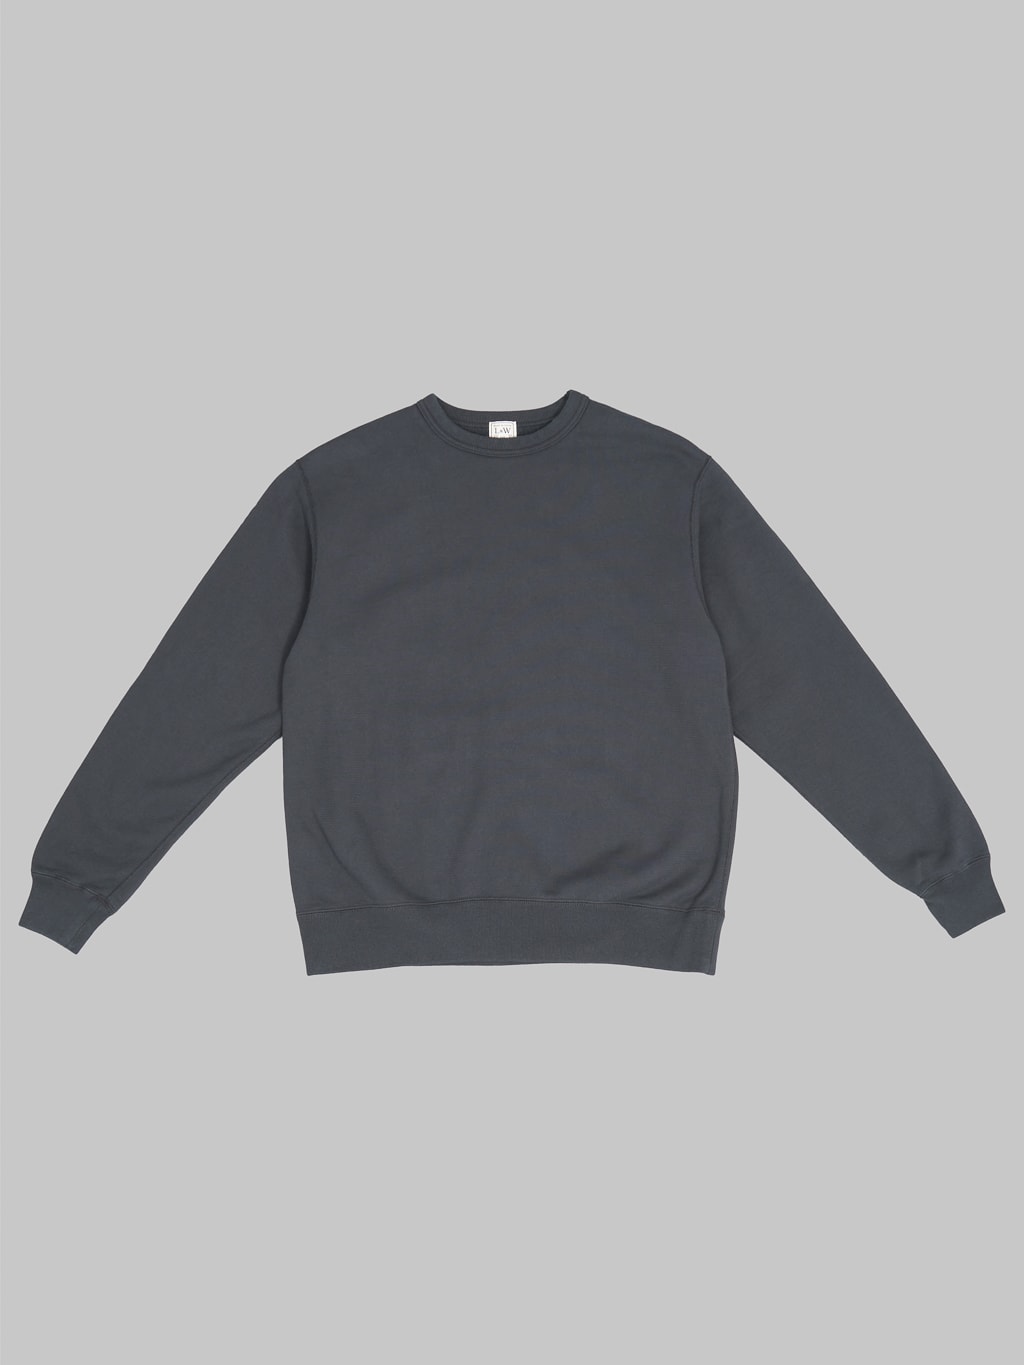 Loop Weft Vintage Pinborder Knit Crewneck Sweatshirt Antique Black front